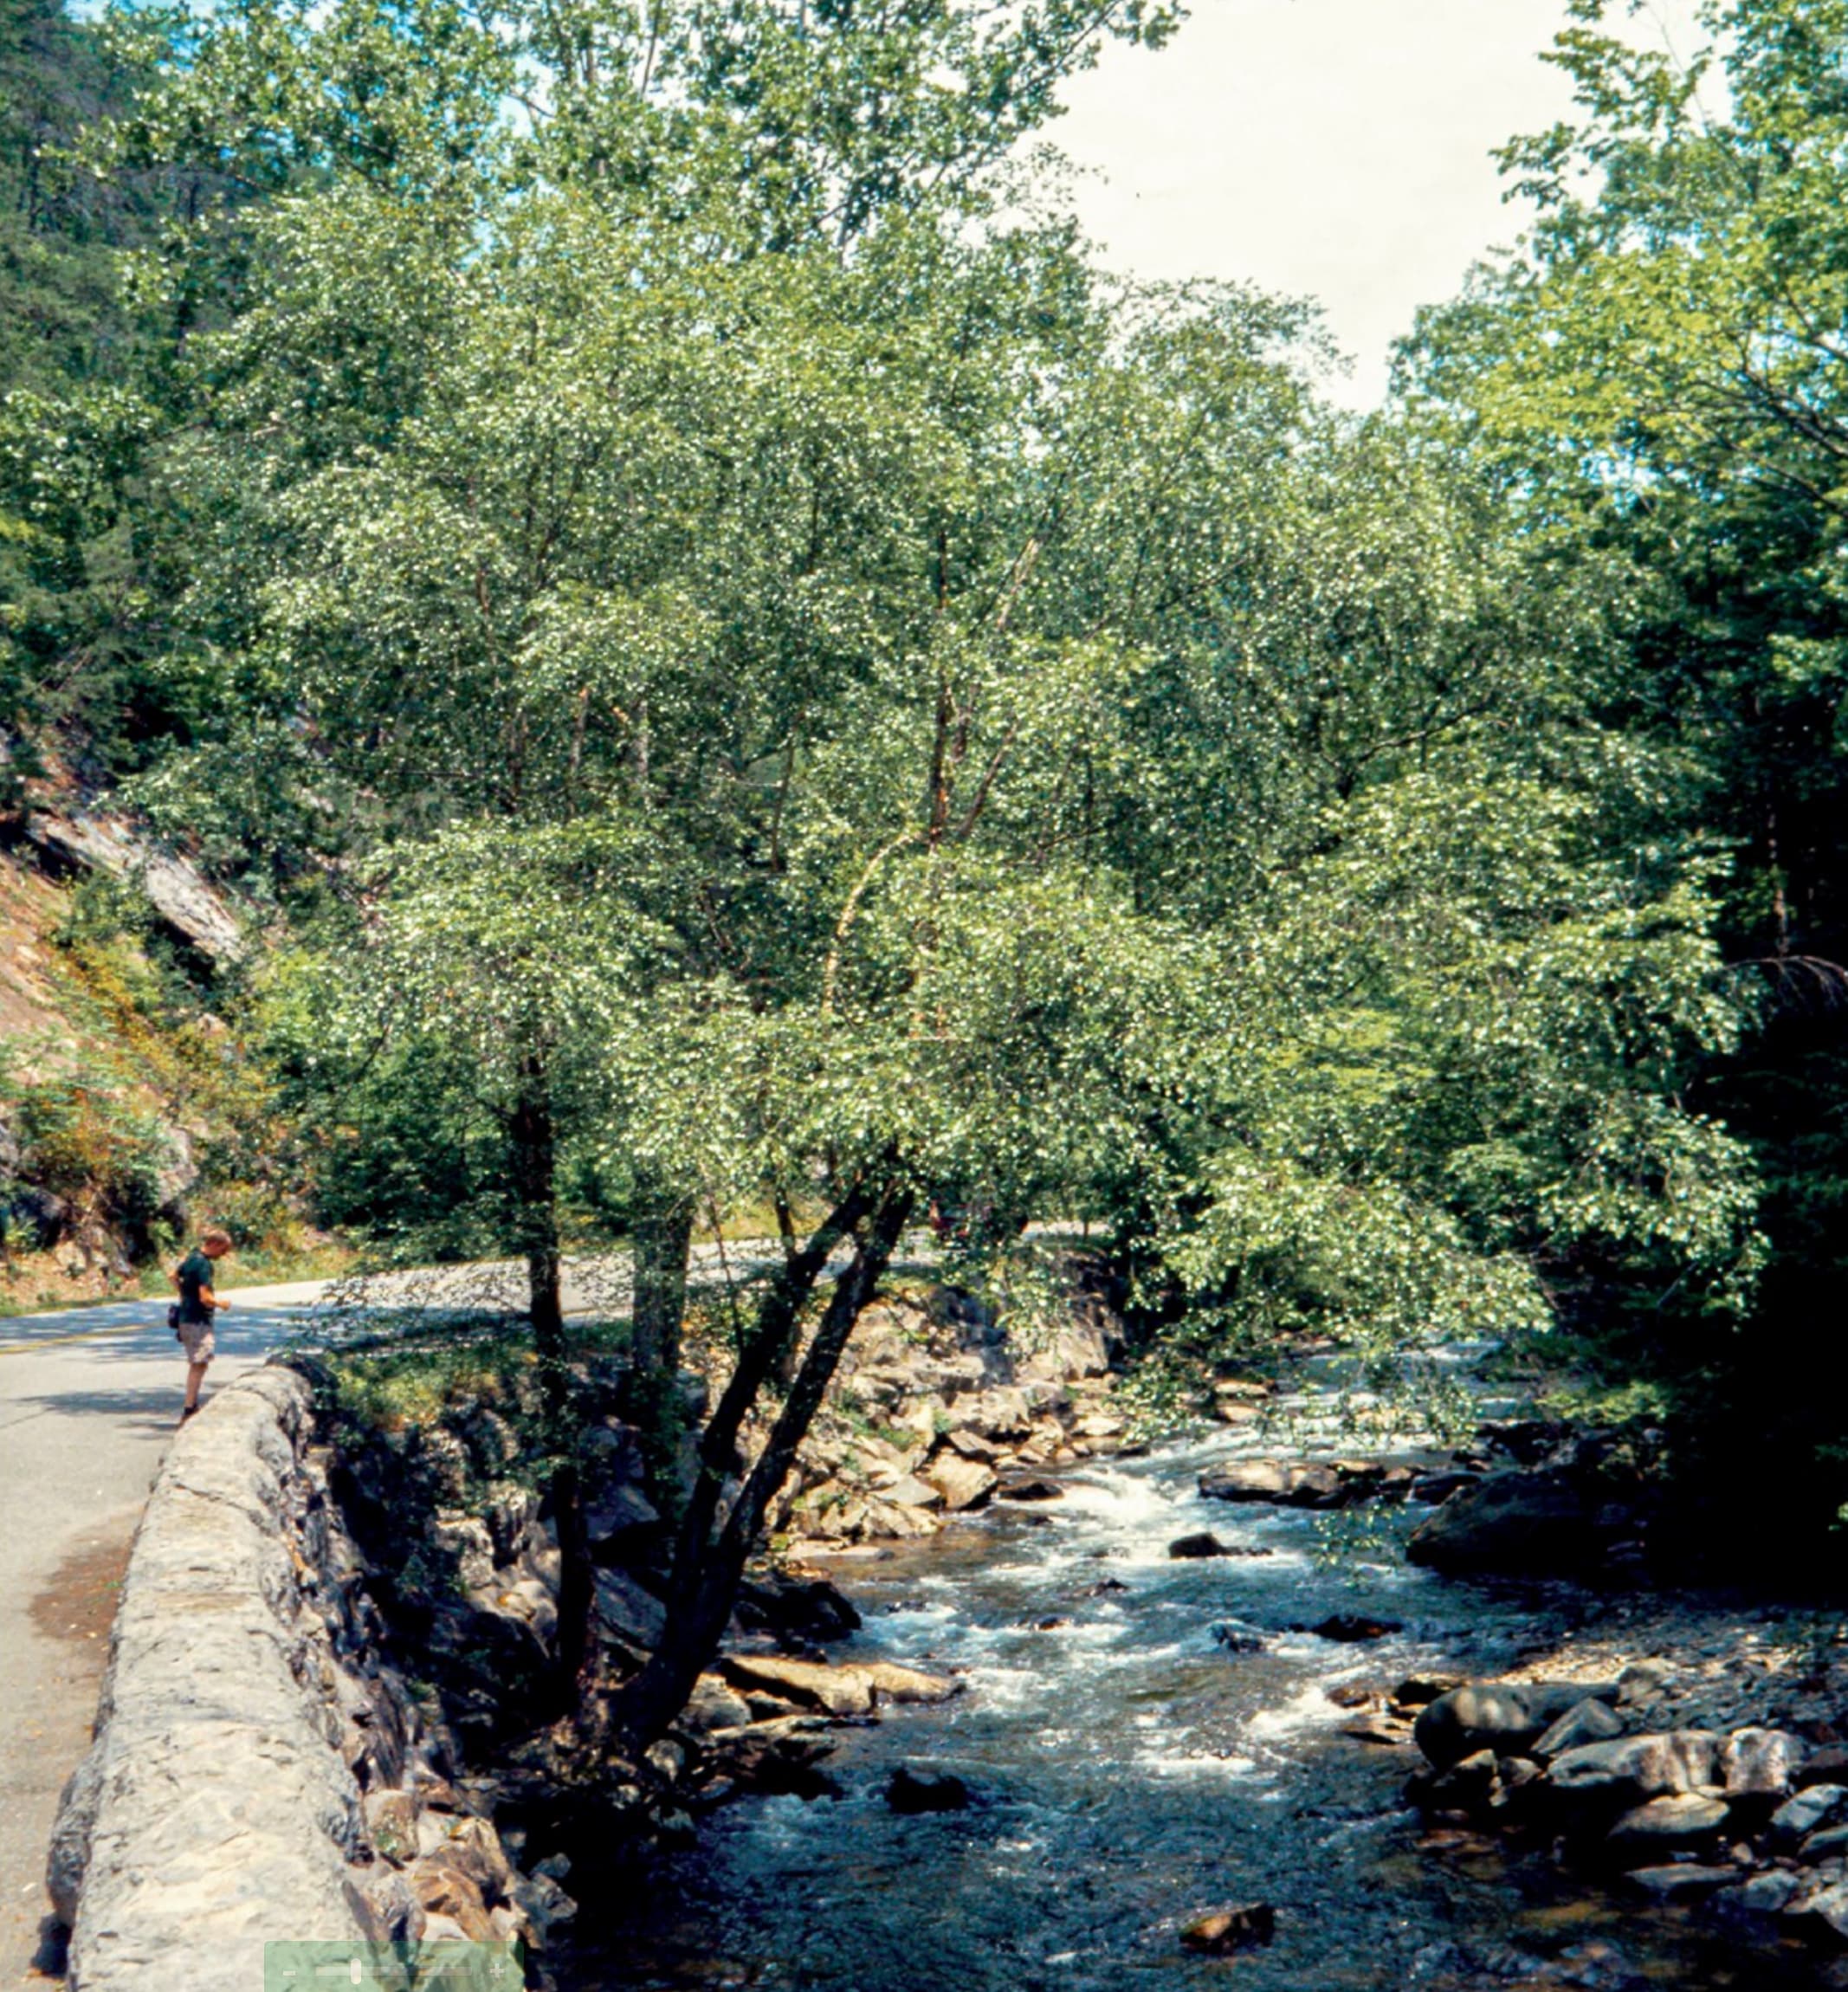 Black Birch (Betula nigera) in its natral setting beside a stream